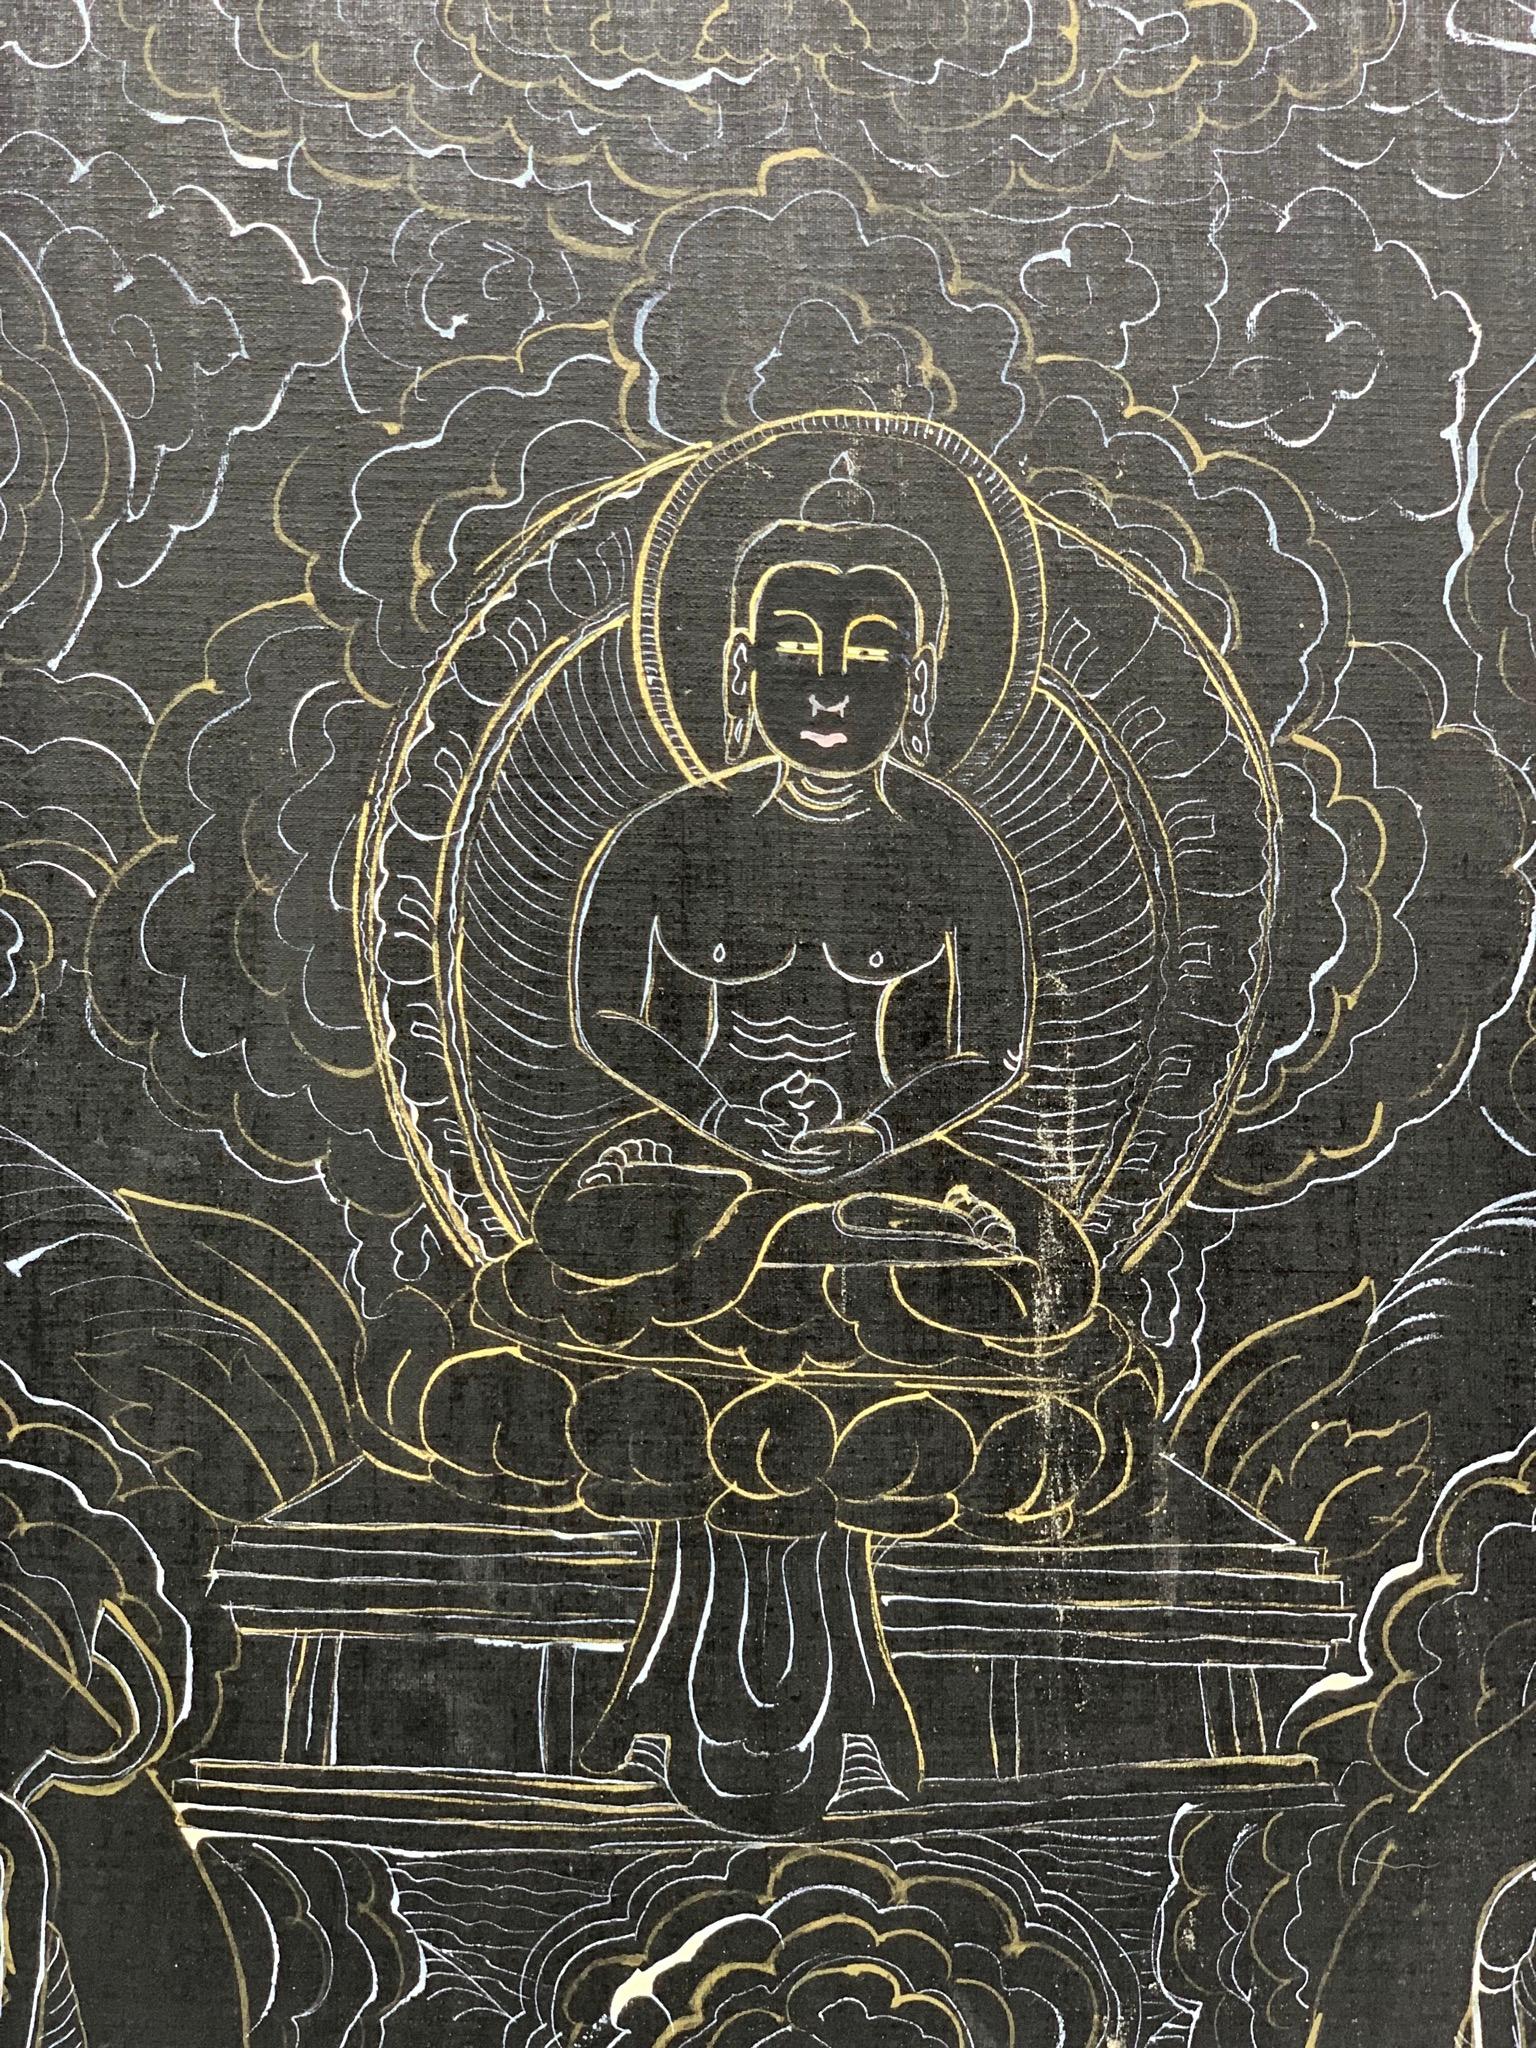 Chinoiserie Black and White Chinese Mandala with Scenes of Buddha